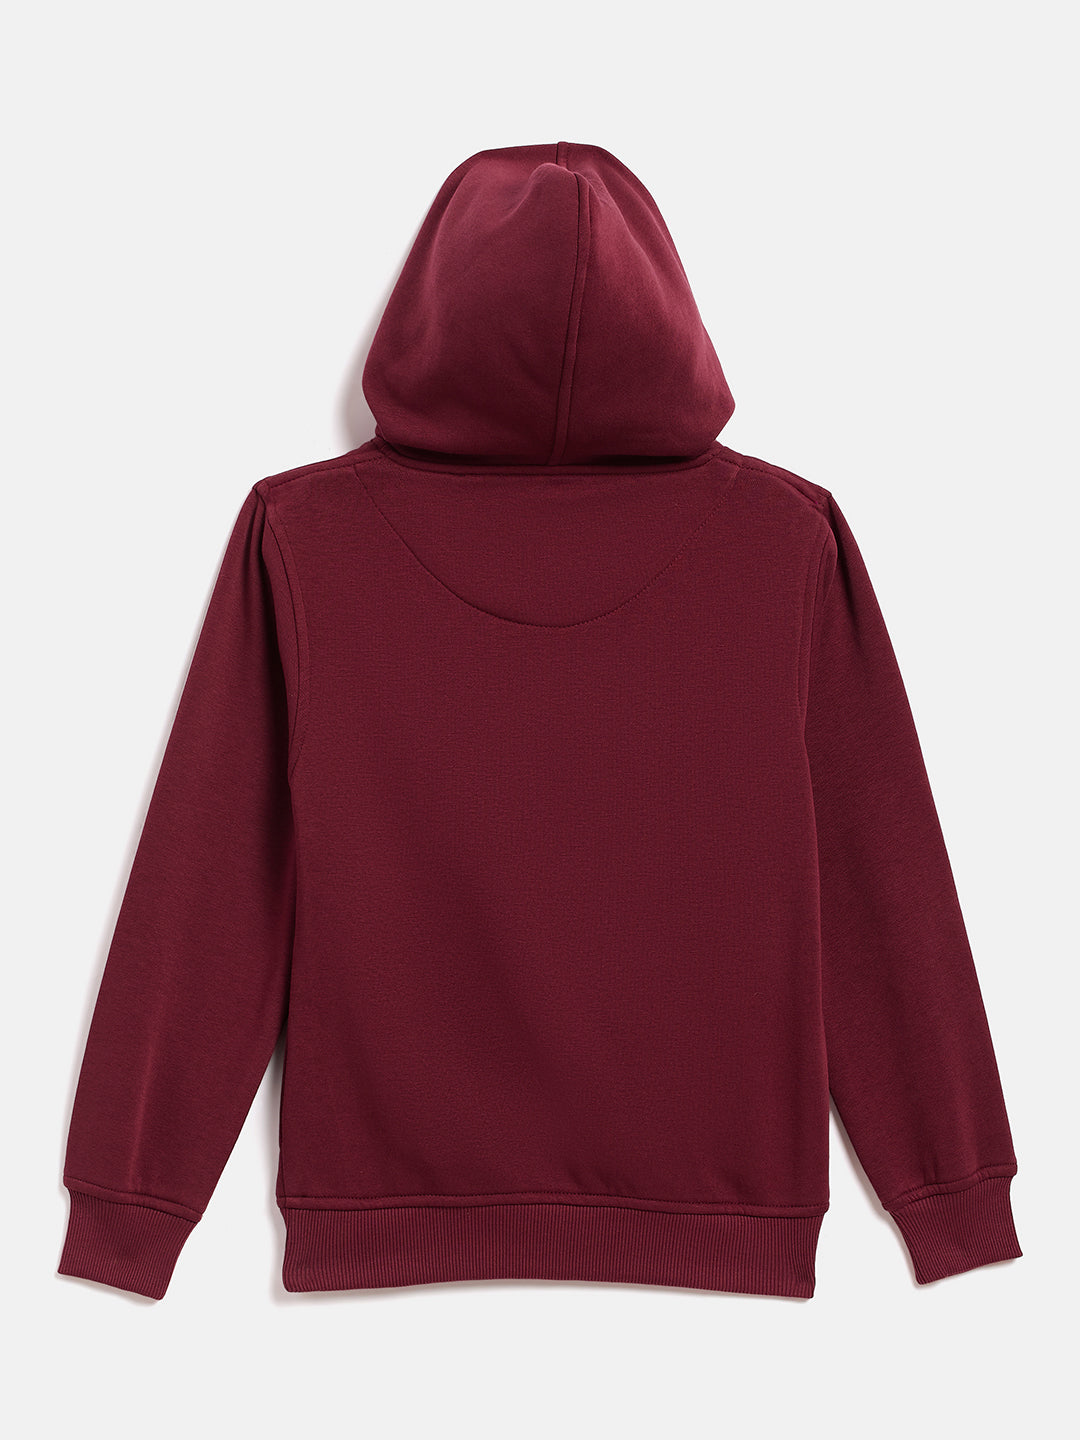 Maroon Printed Hooded Sweatshirt - Girls Sweatshirts